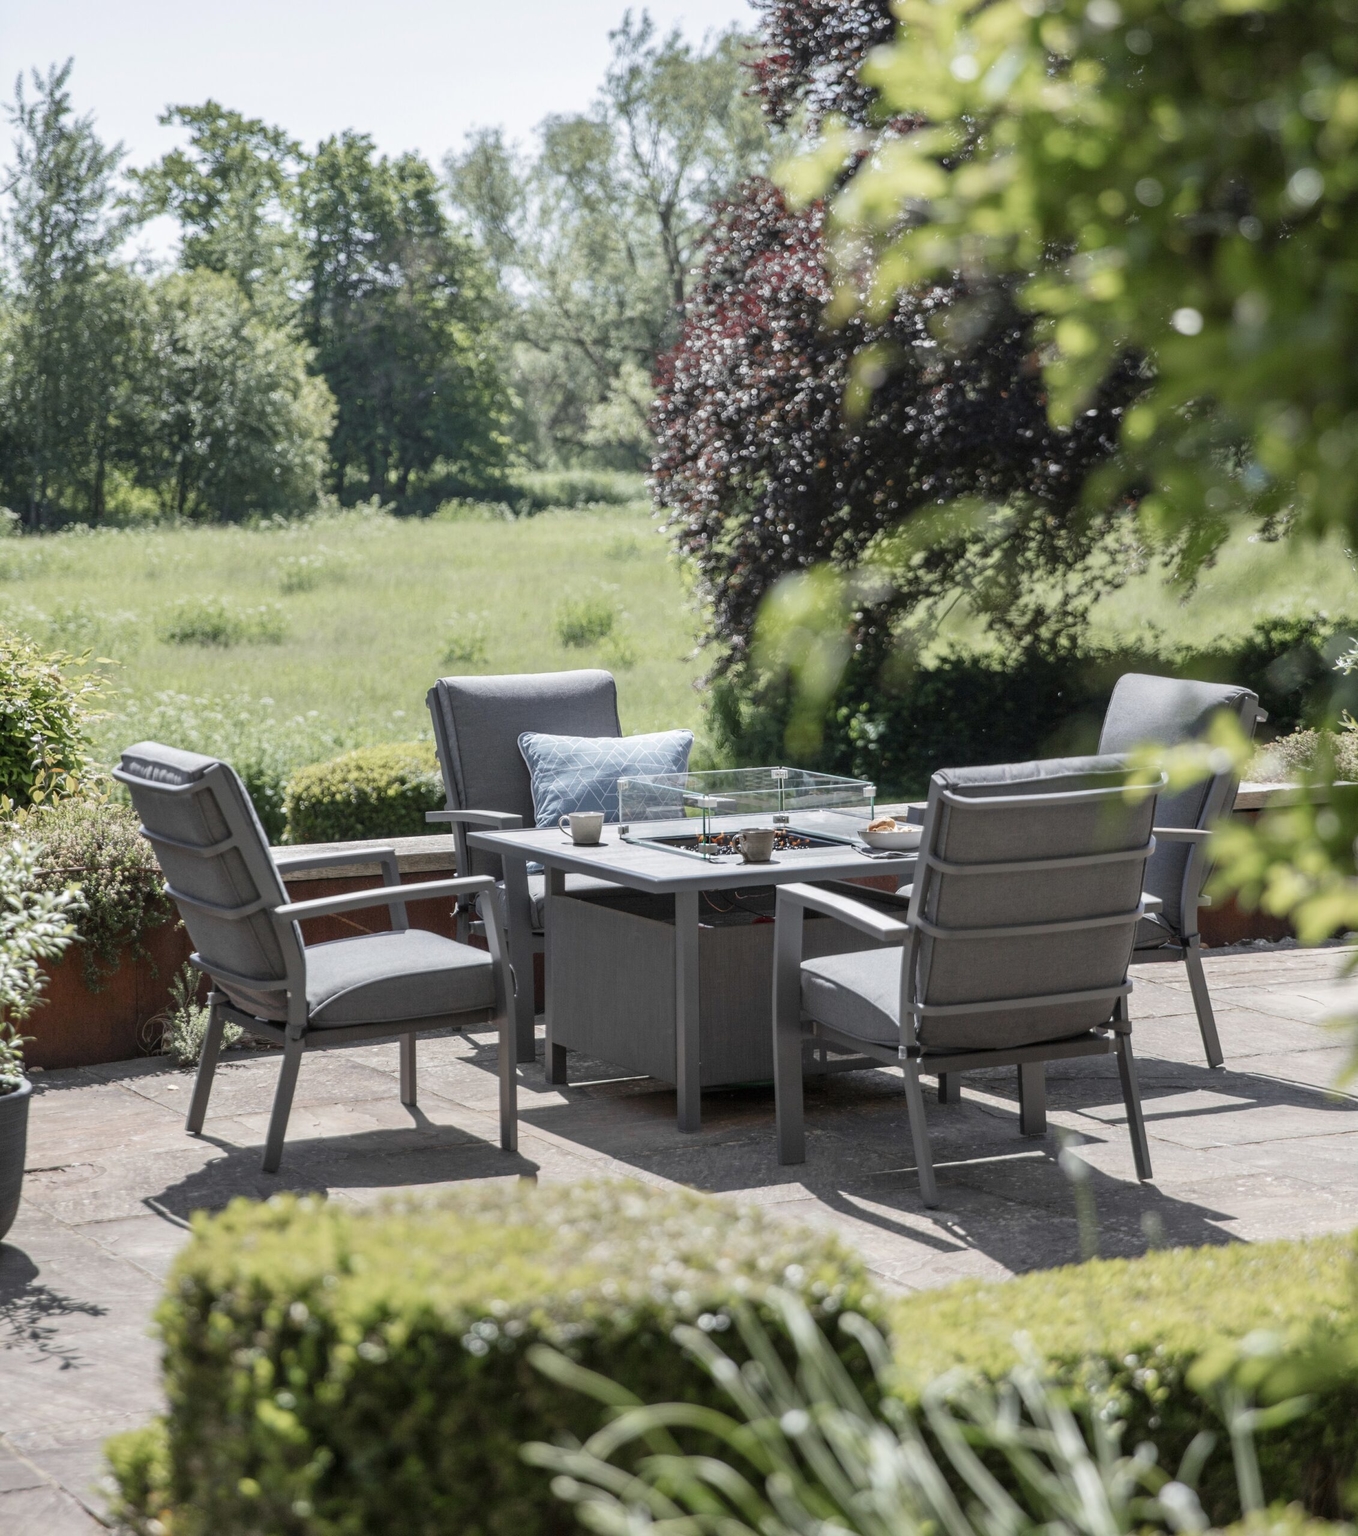 Lg Outdoor Monza Relaxer Set With Gas Firepit Table Shop Skylark Garden Centre